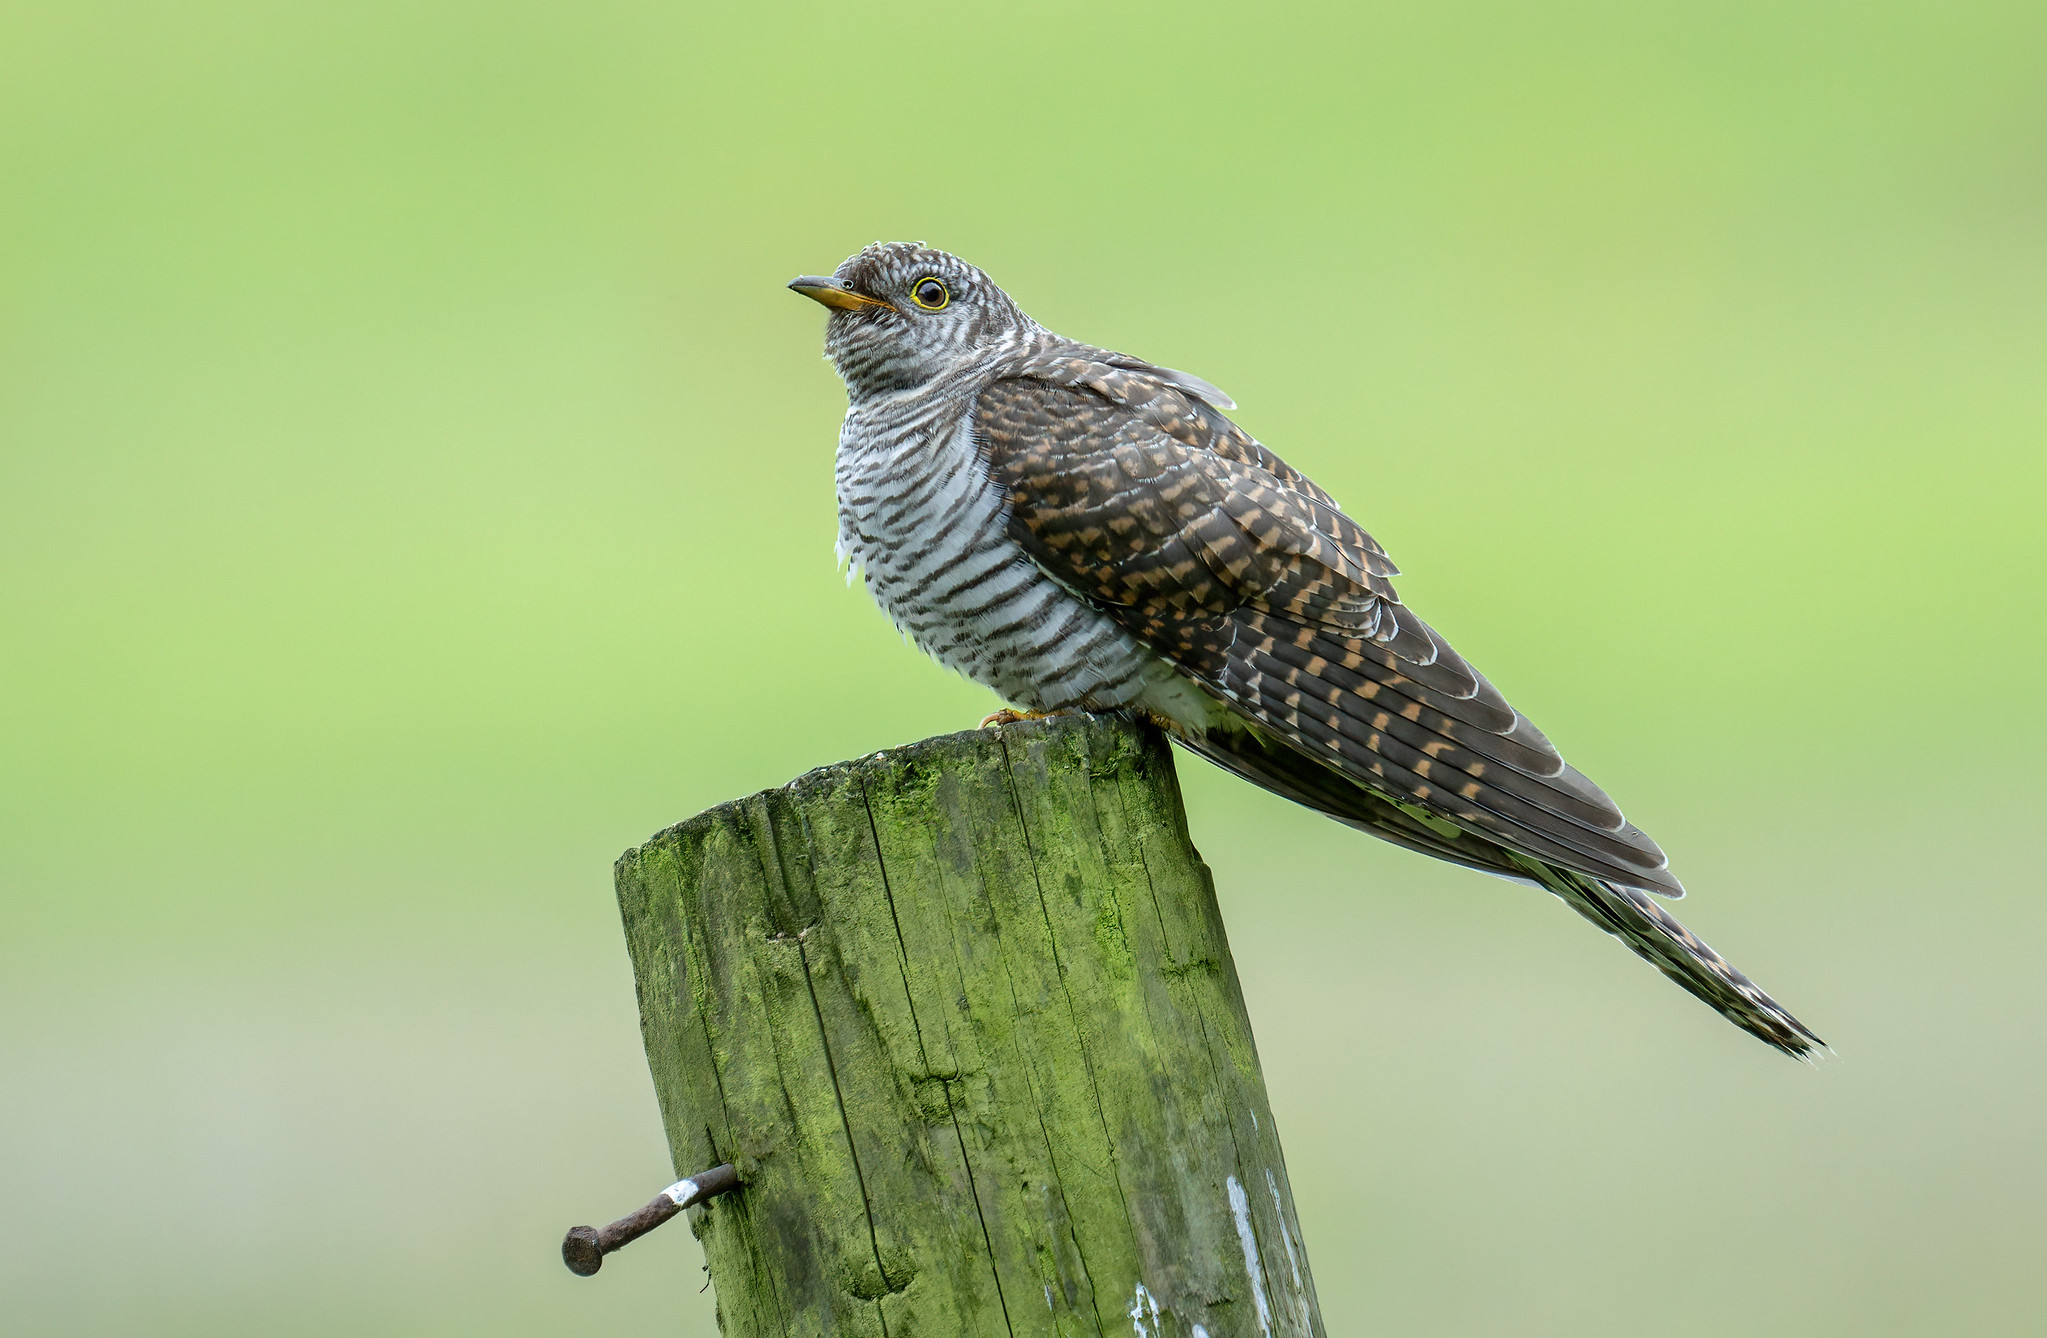 Juvenile Cuckoo